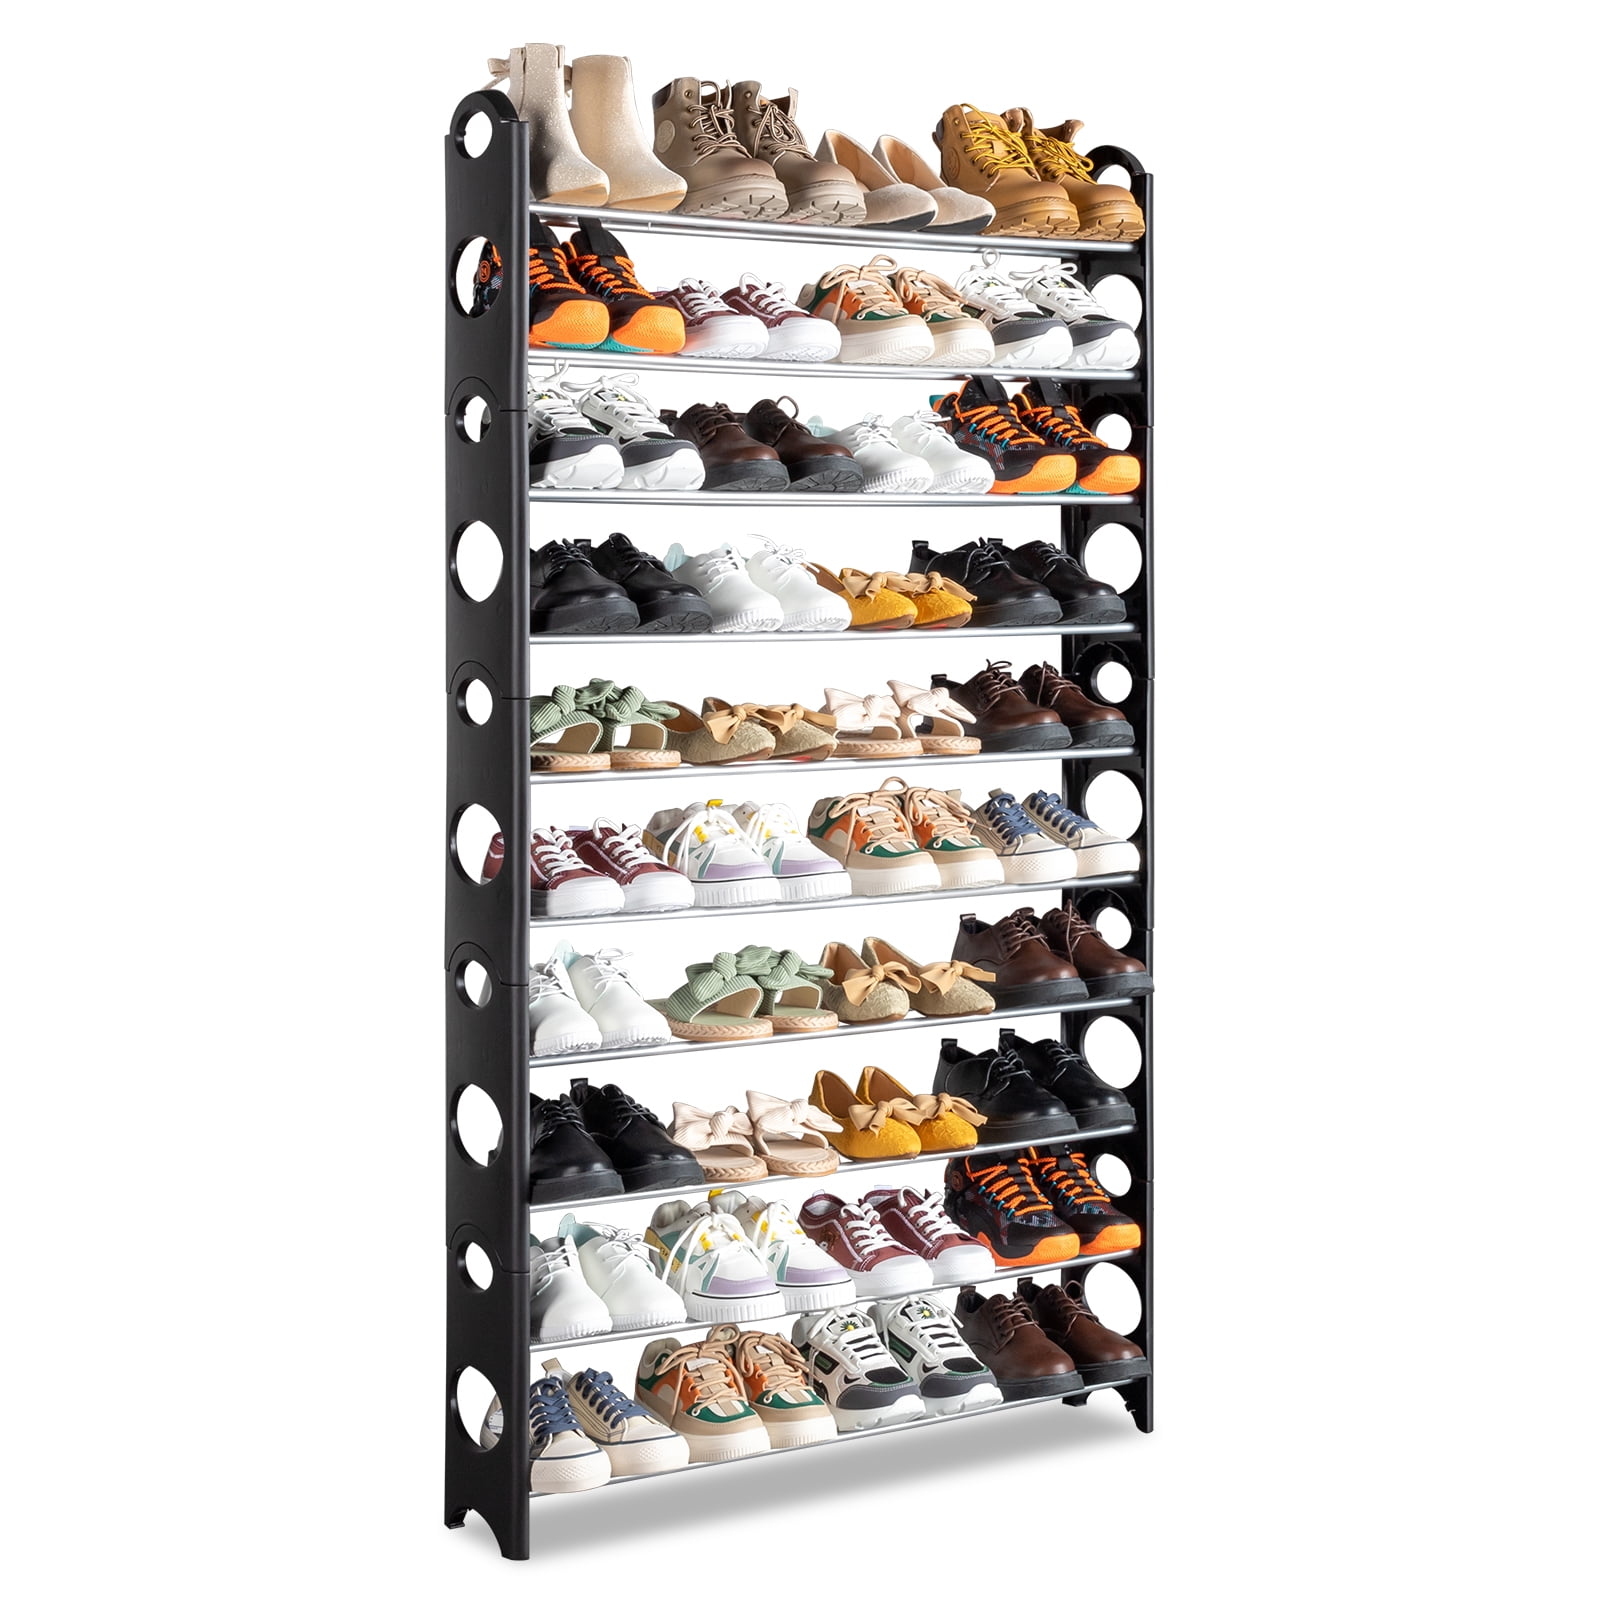 NEATLY Shoe Organizer Shoe Storage … curated on LTK